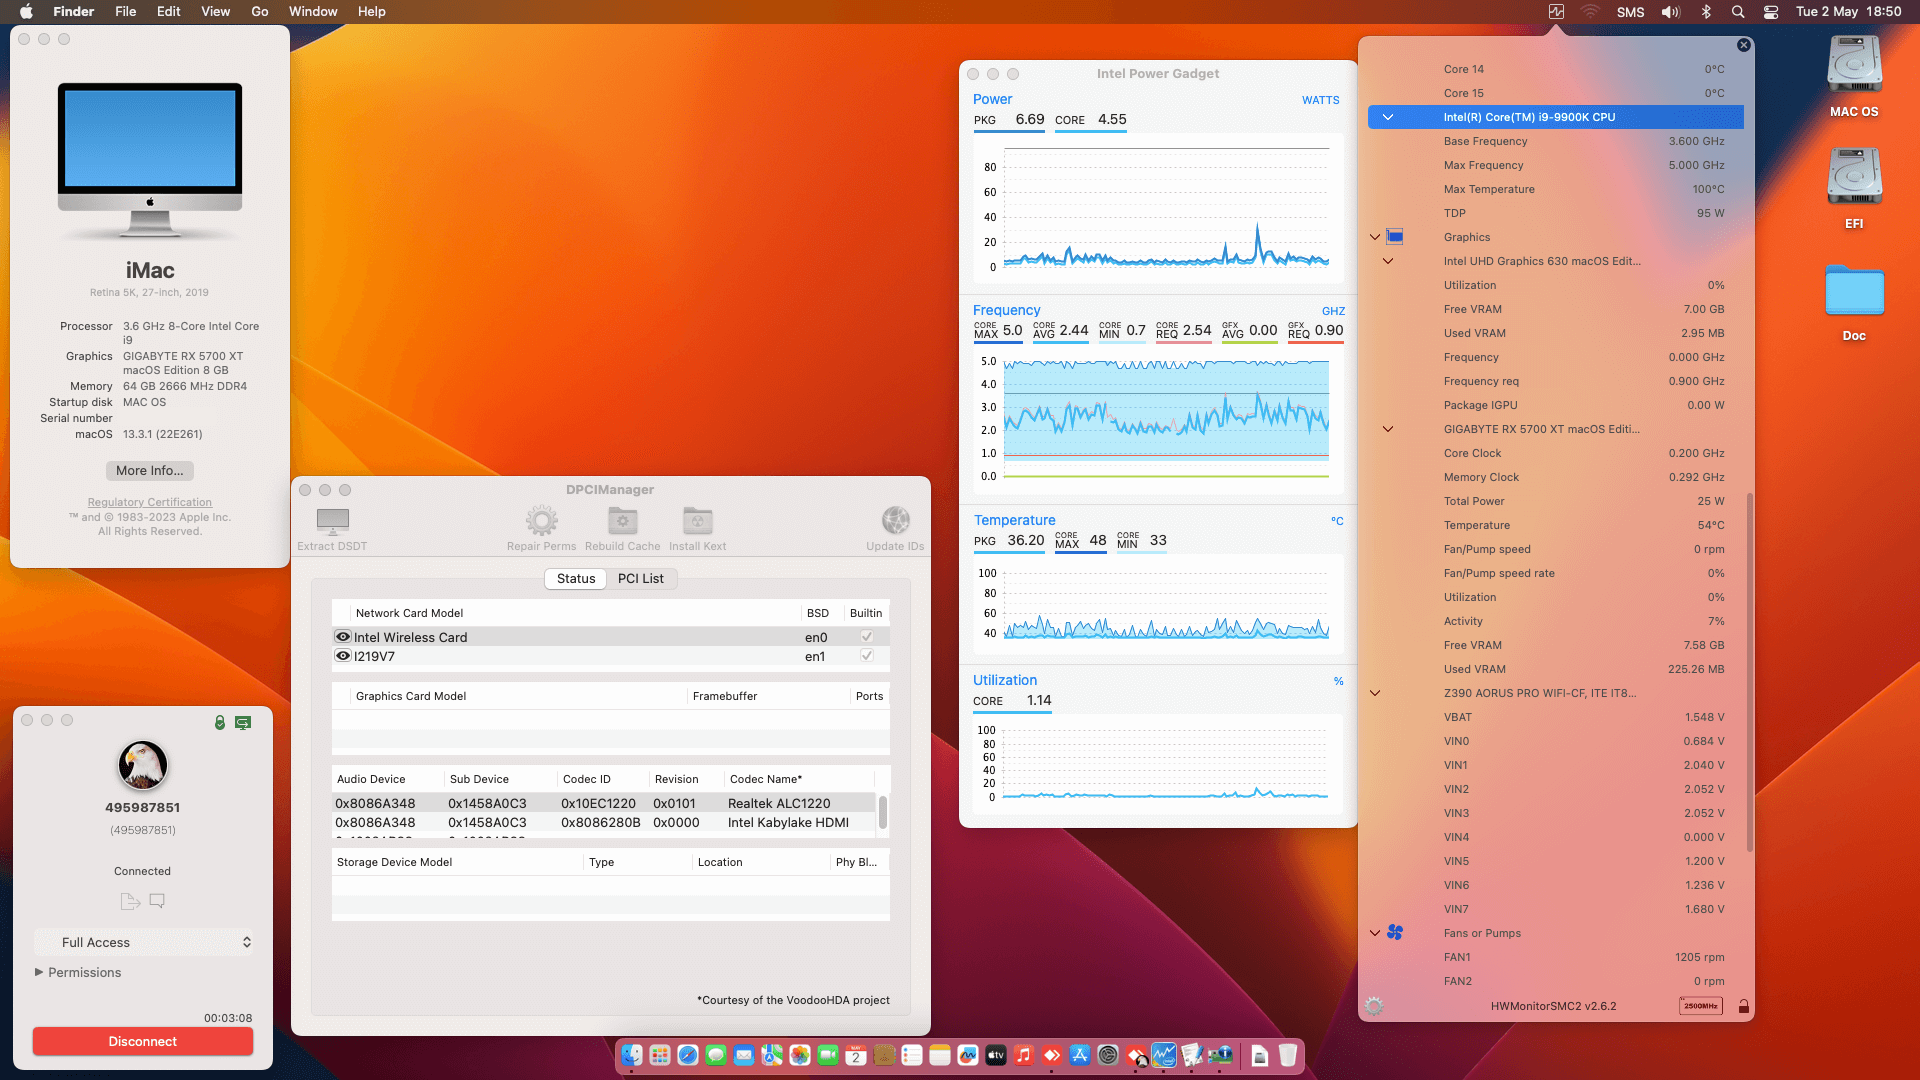 Success Hackintosh macOS Ventura 13.3.1 Build 22E261 in Gigabyte Z390 Aorus Pro Wifi + Intel Core i9 9900K + Gigabyte RX 5700 XT